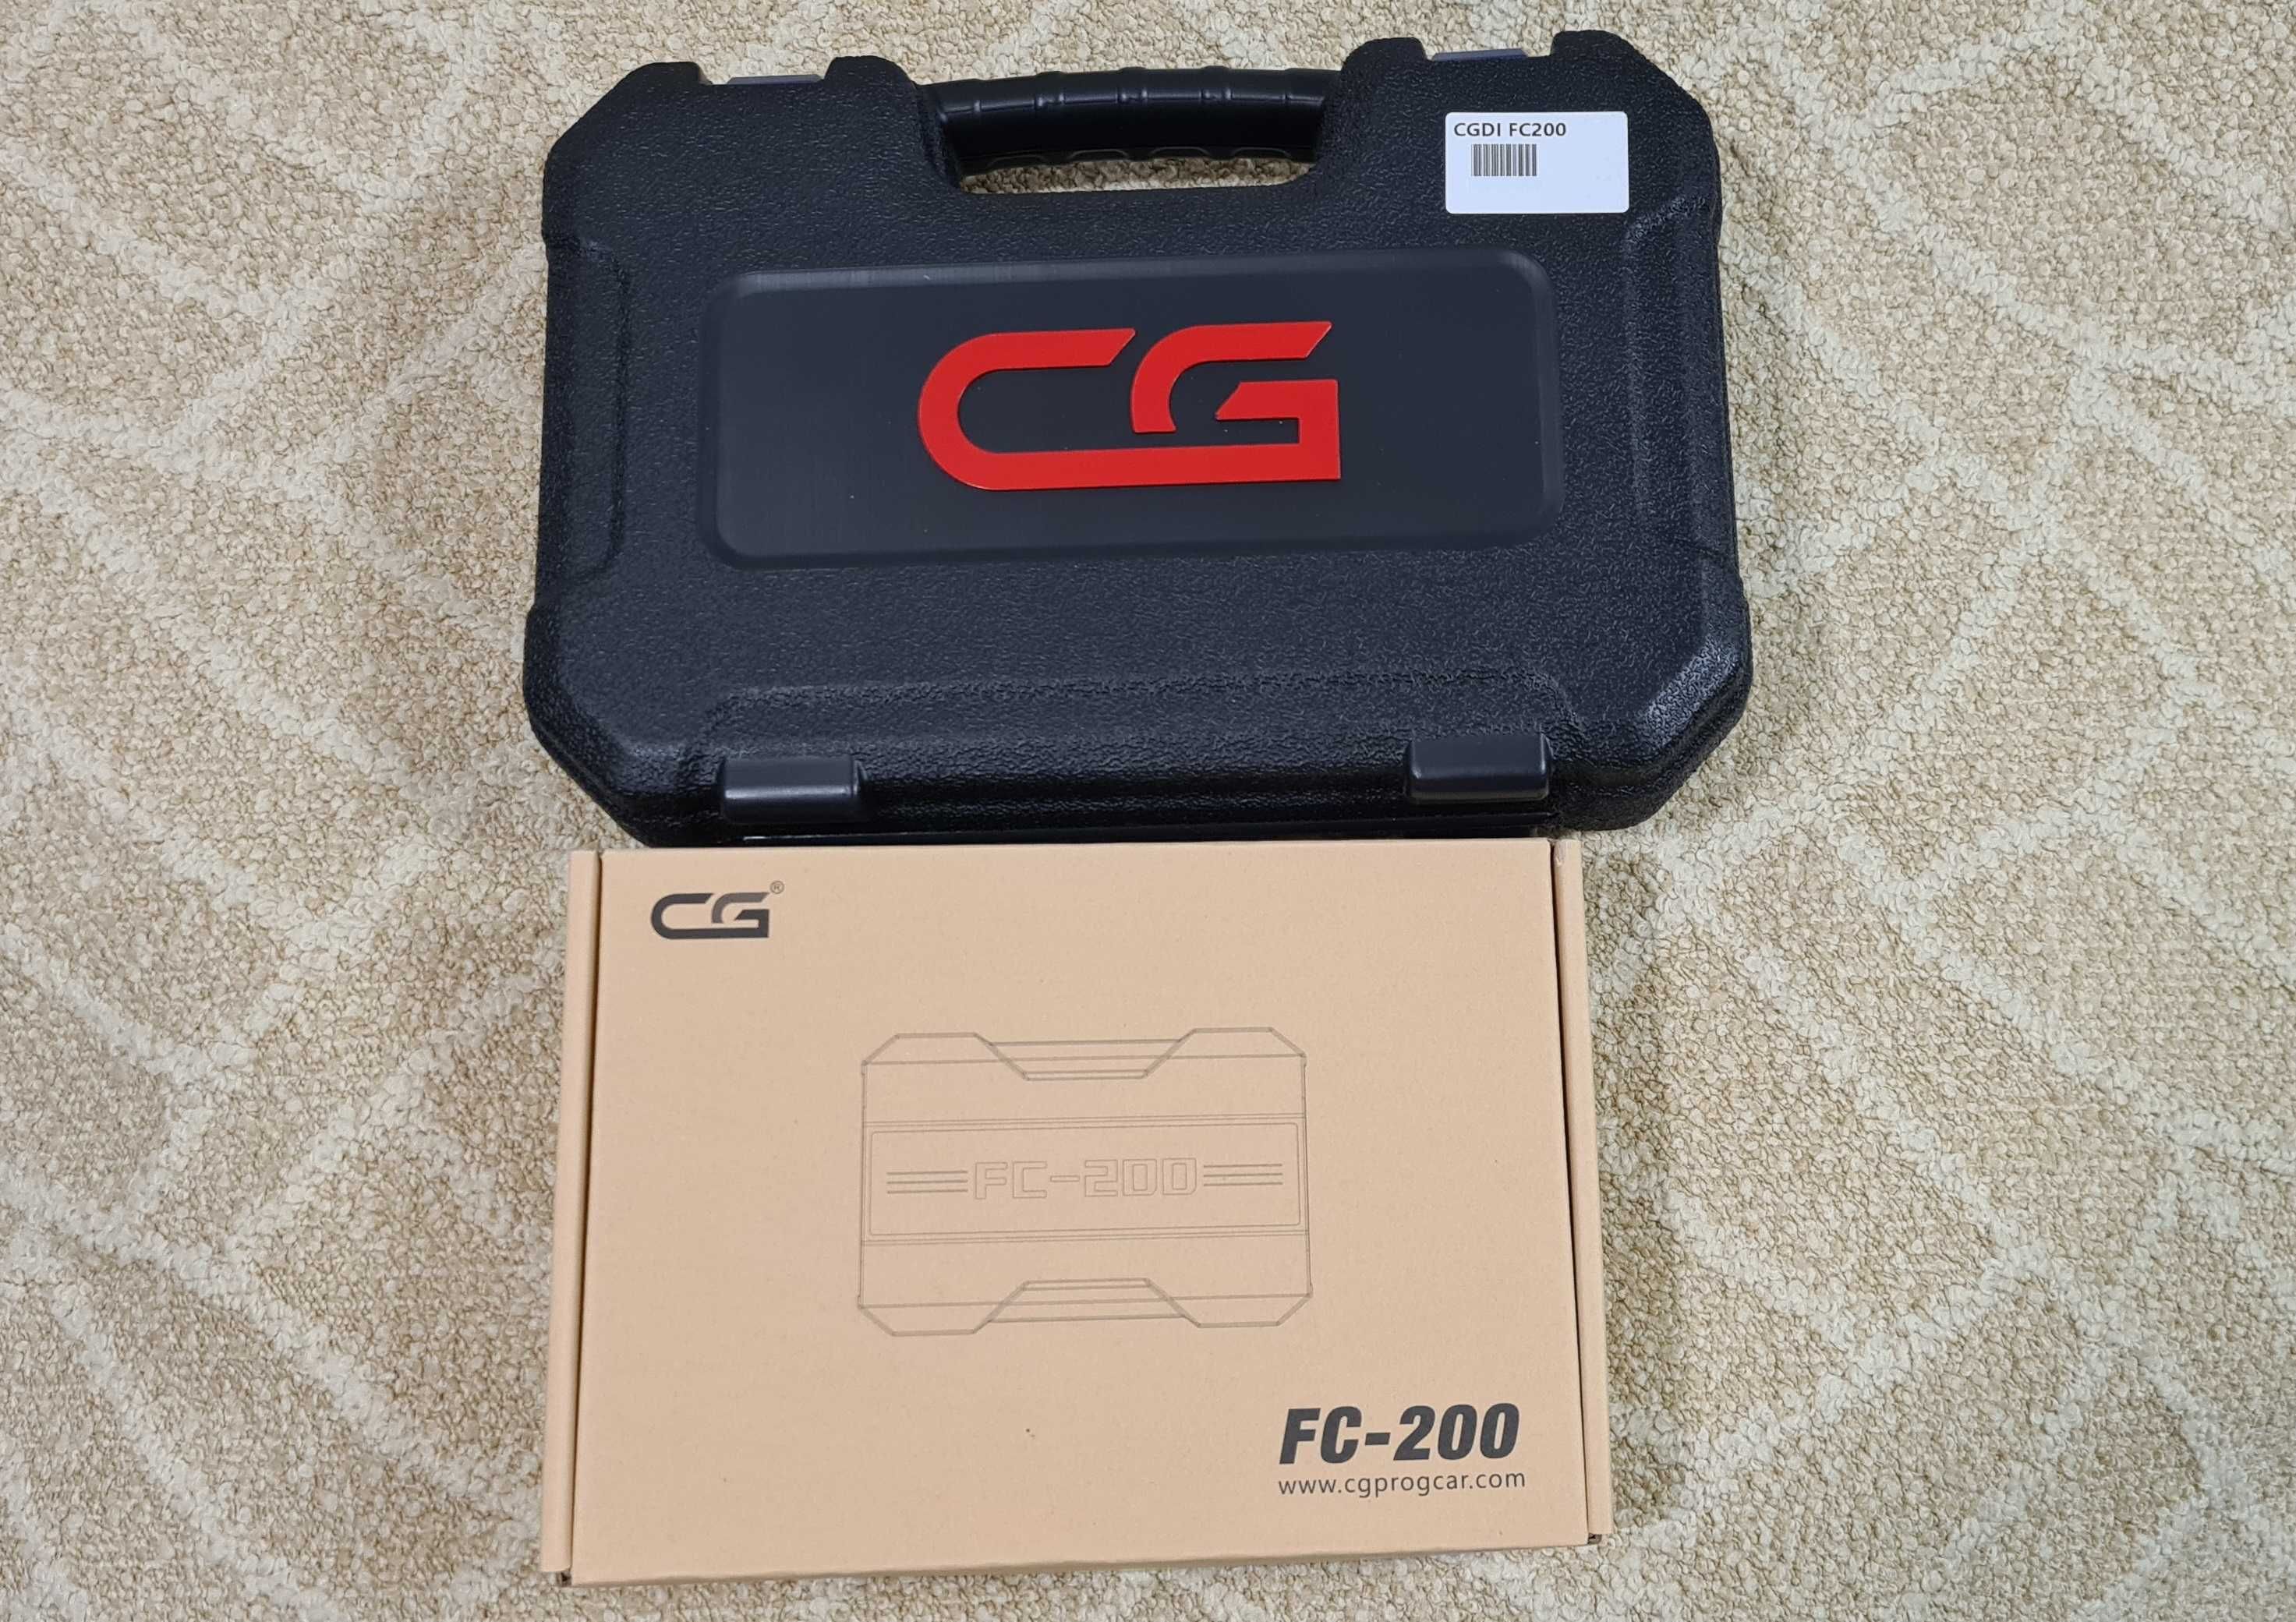 CG CGDI FC200 Programator ecu auto, 4200 ECUs, ISN, set adaptoare full